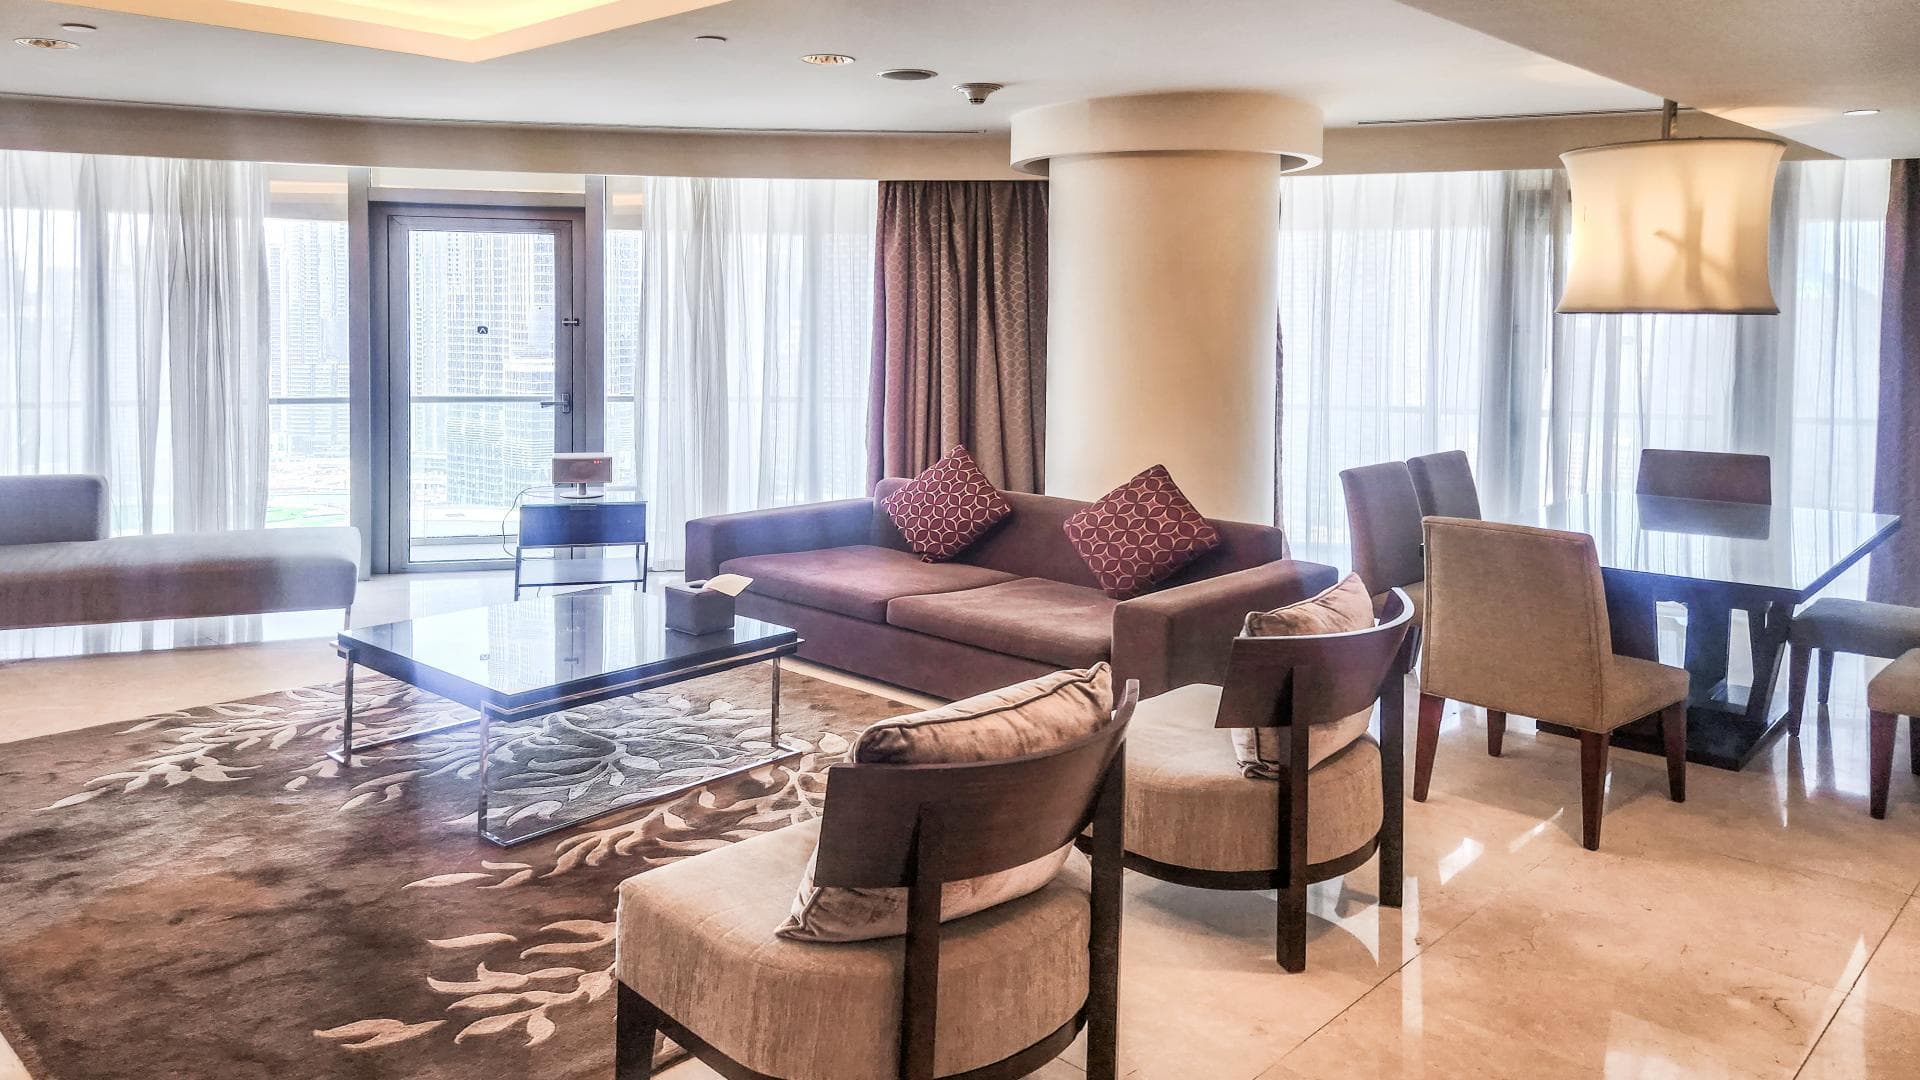 3 Bedroom Apartment For Rent The Address Dubai Mall Lp37239 691dd04d05ac280.jpg